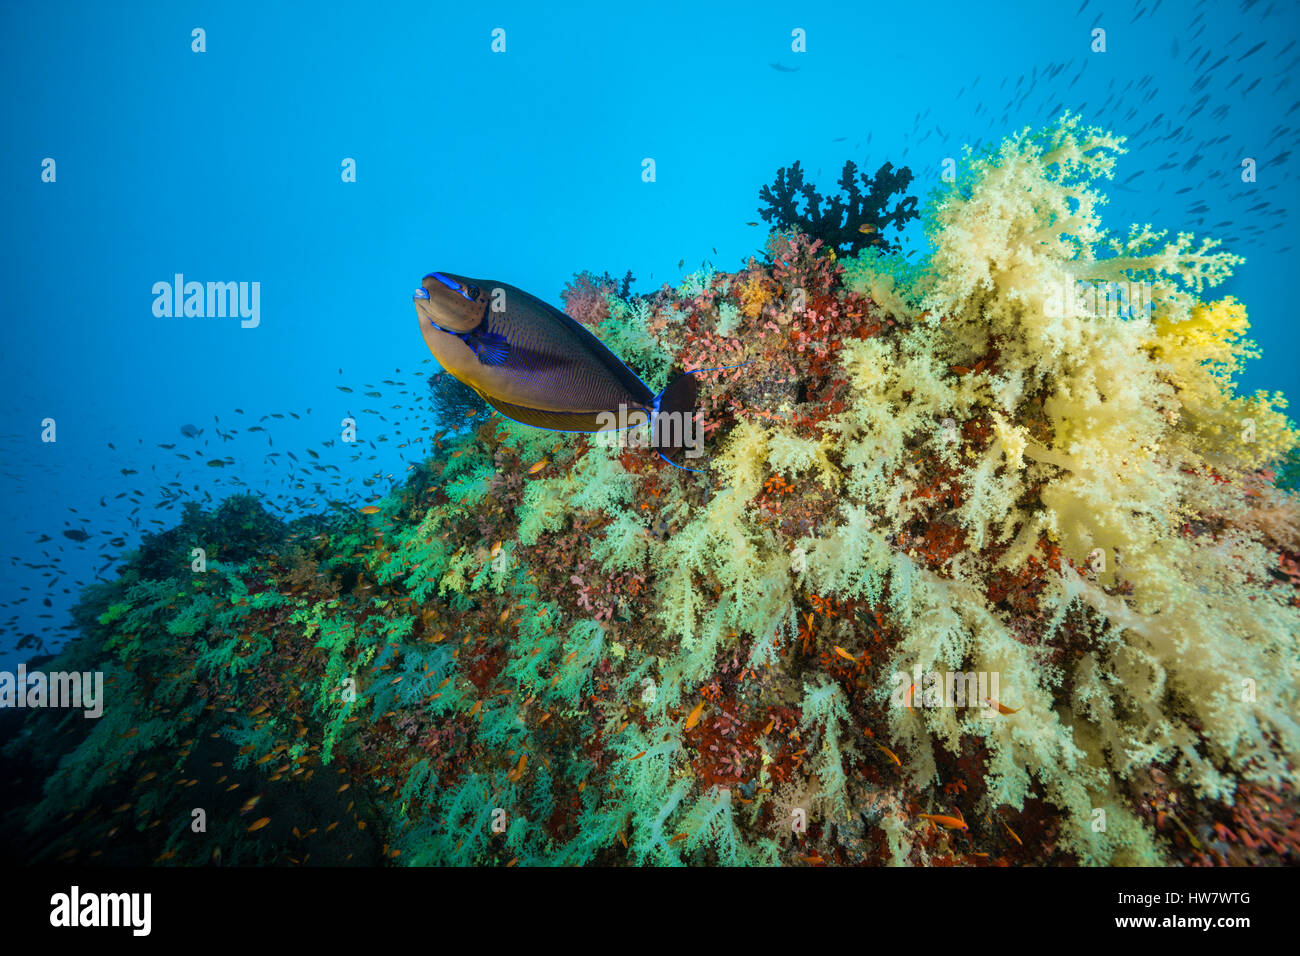 Bignose Unicornfish at Coral Reef, Naso vlamingii, Felidhu Atoll, Maldives Stock Photo